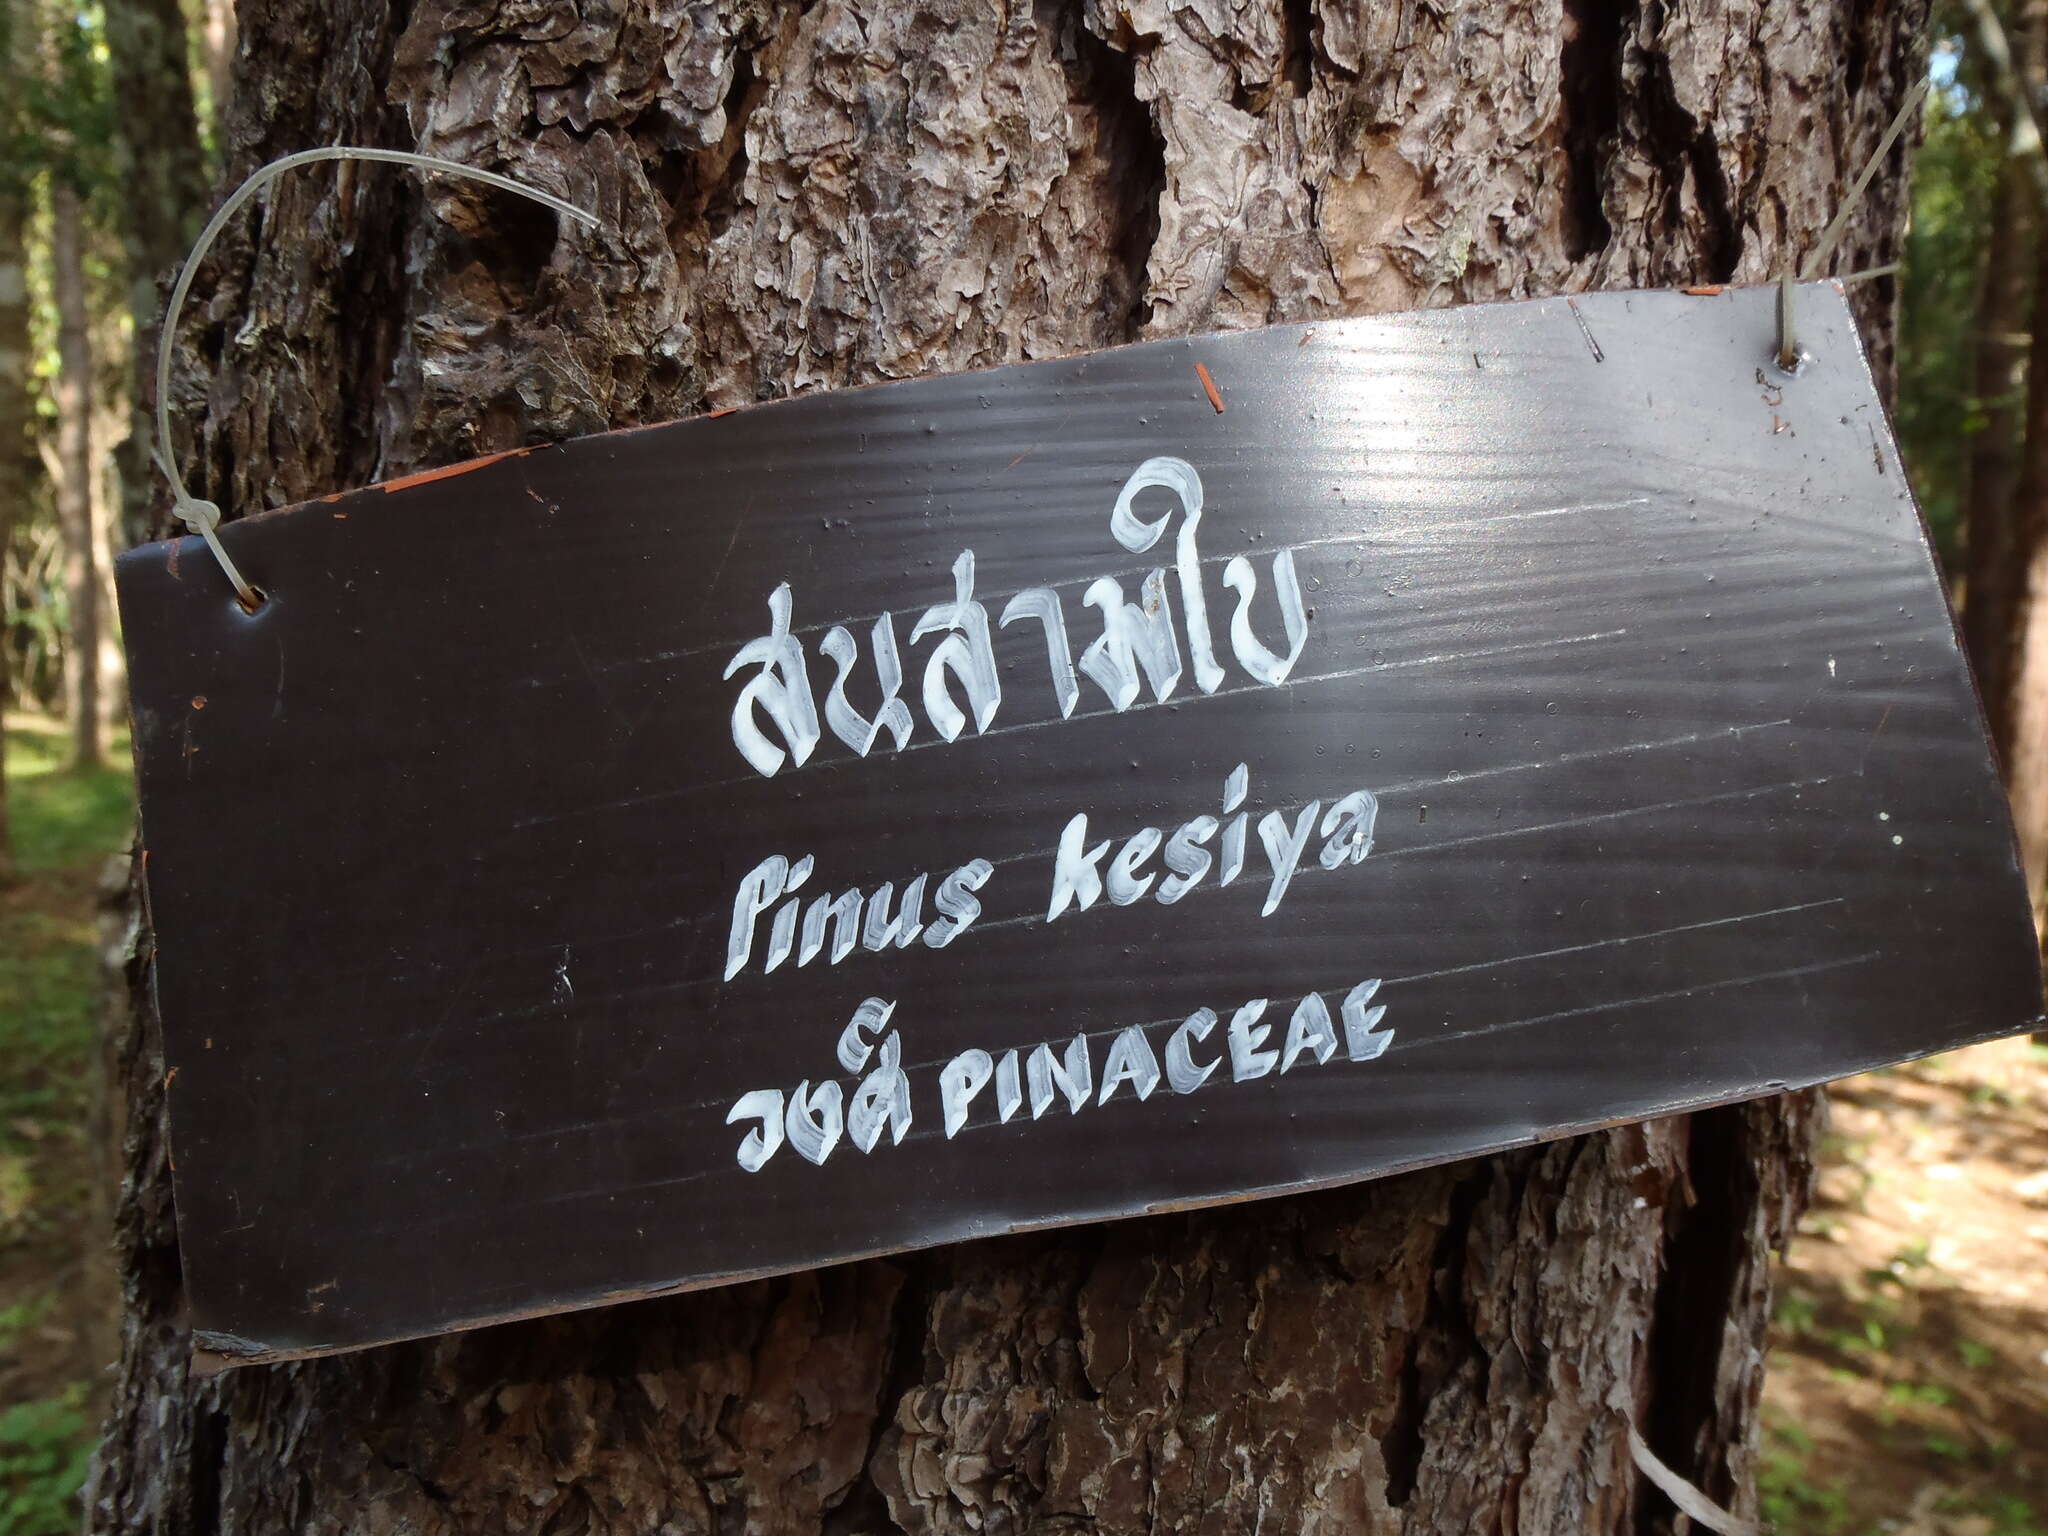 Image of Benguet Pine